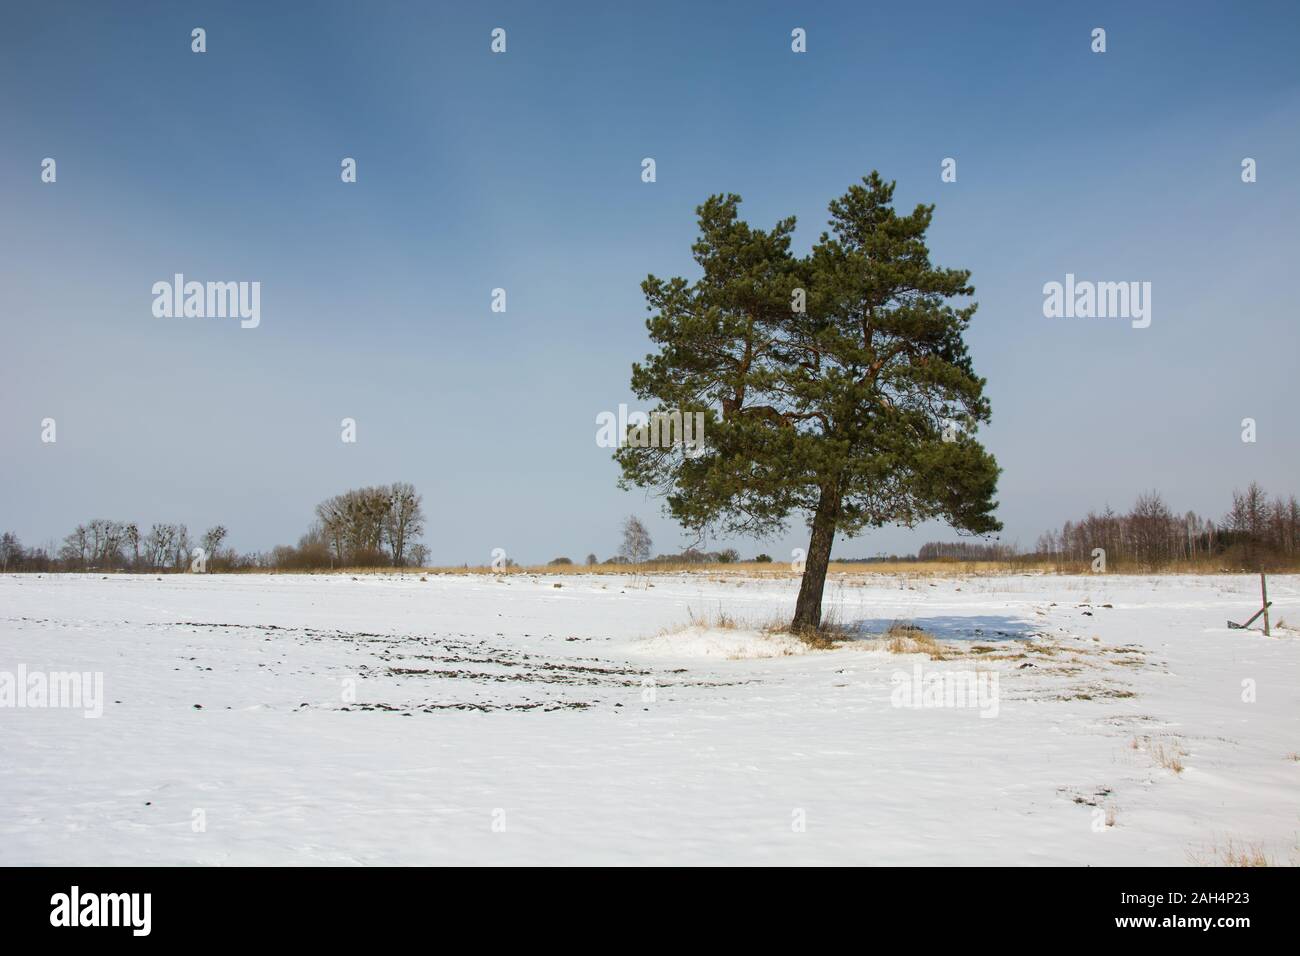 Coniferous tree on a snowy field, winter view Stock Photo